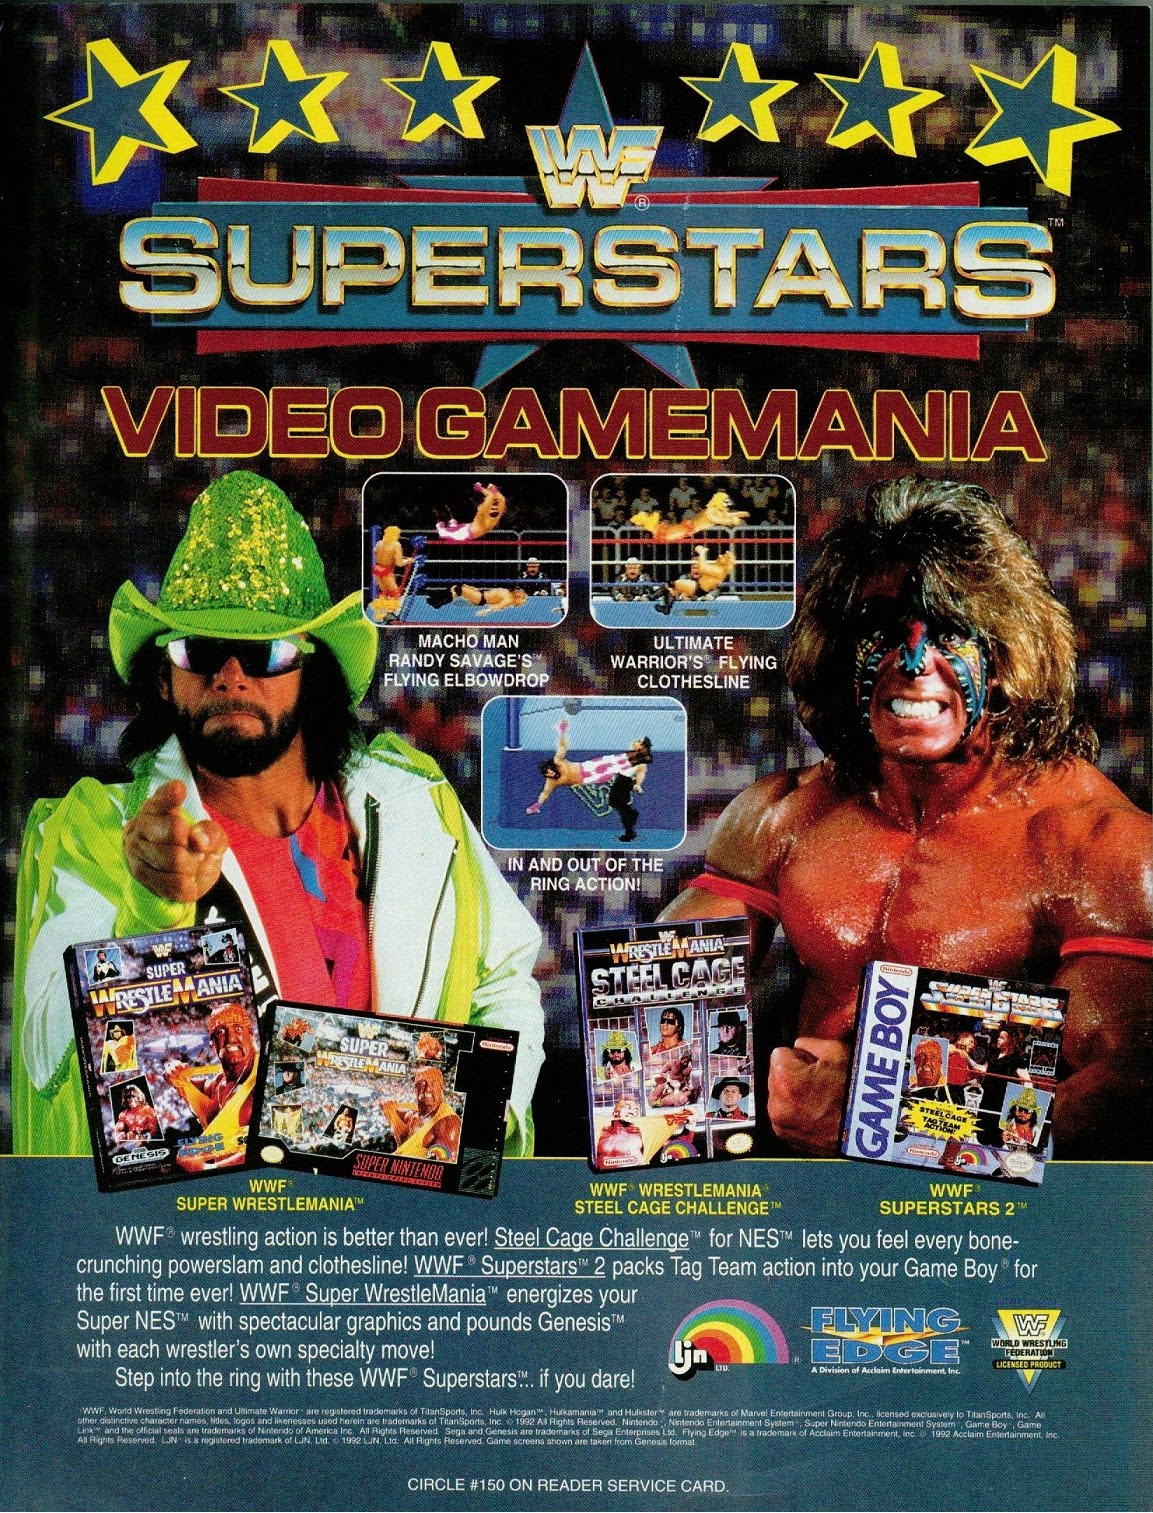 vintage gaming ads --  old video game ads - Superstars Video Gamemania Game Boy Super Wrestlemani Statning Superstars 2 Wwf wresting action is better than ever sinal Cage Draho k Nes